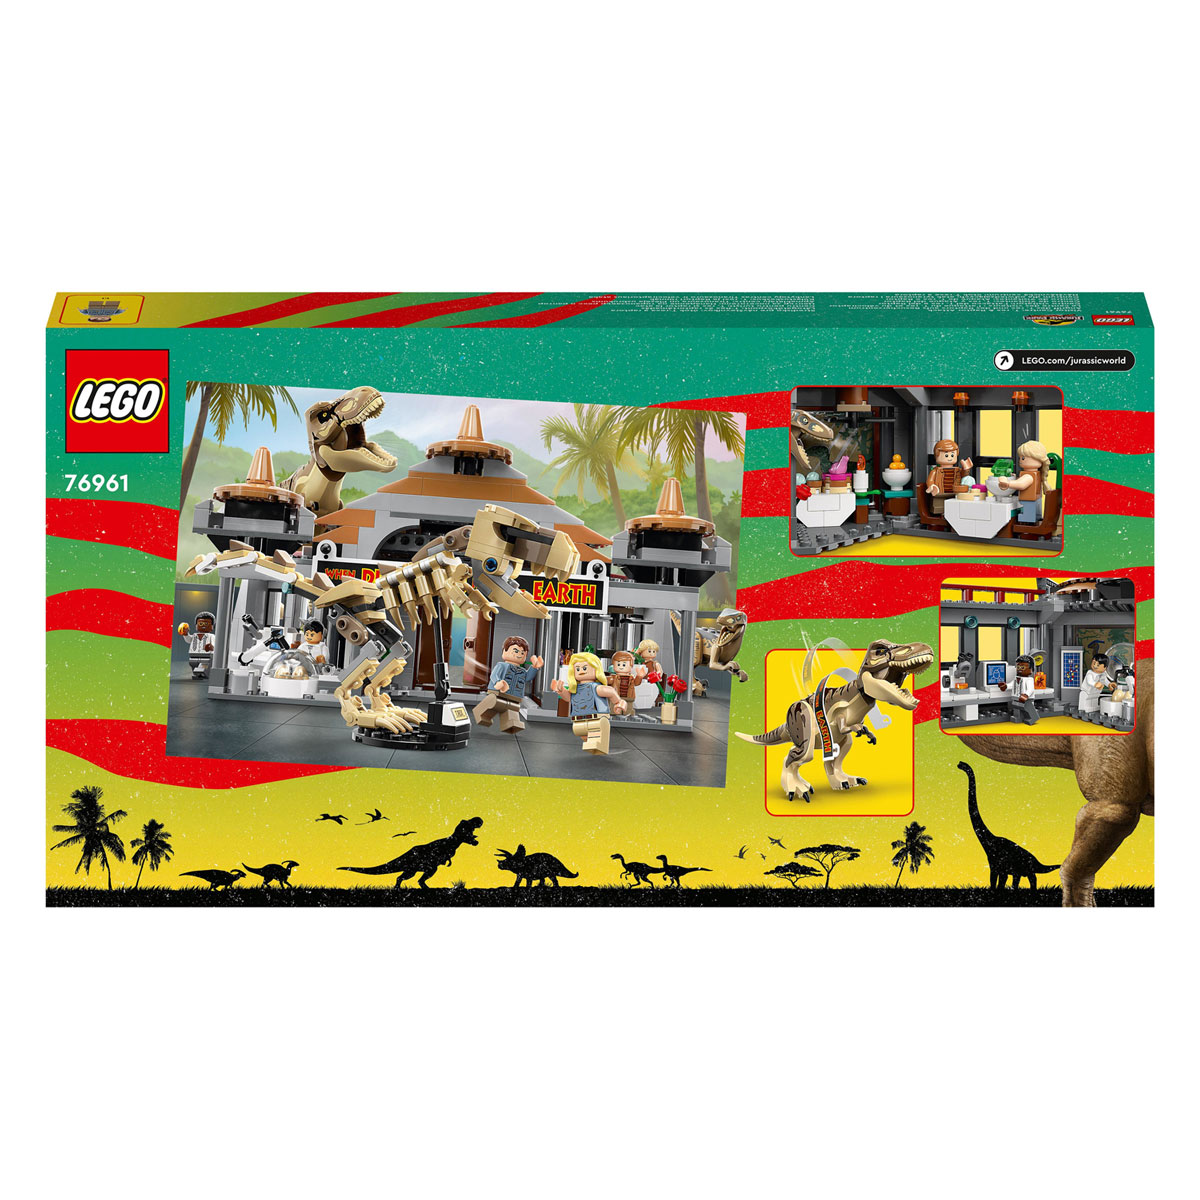 76961 LEGO Jurassic Park Visitor Center : Attaque de T. rex et de raptor